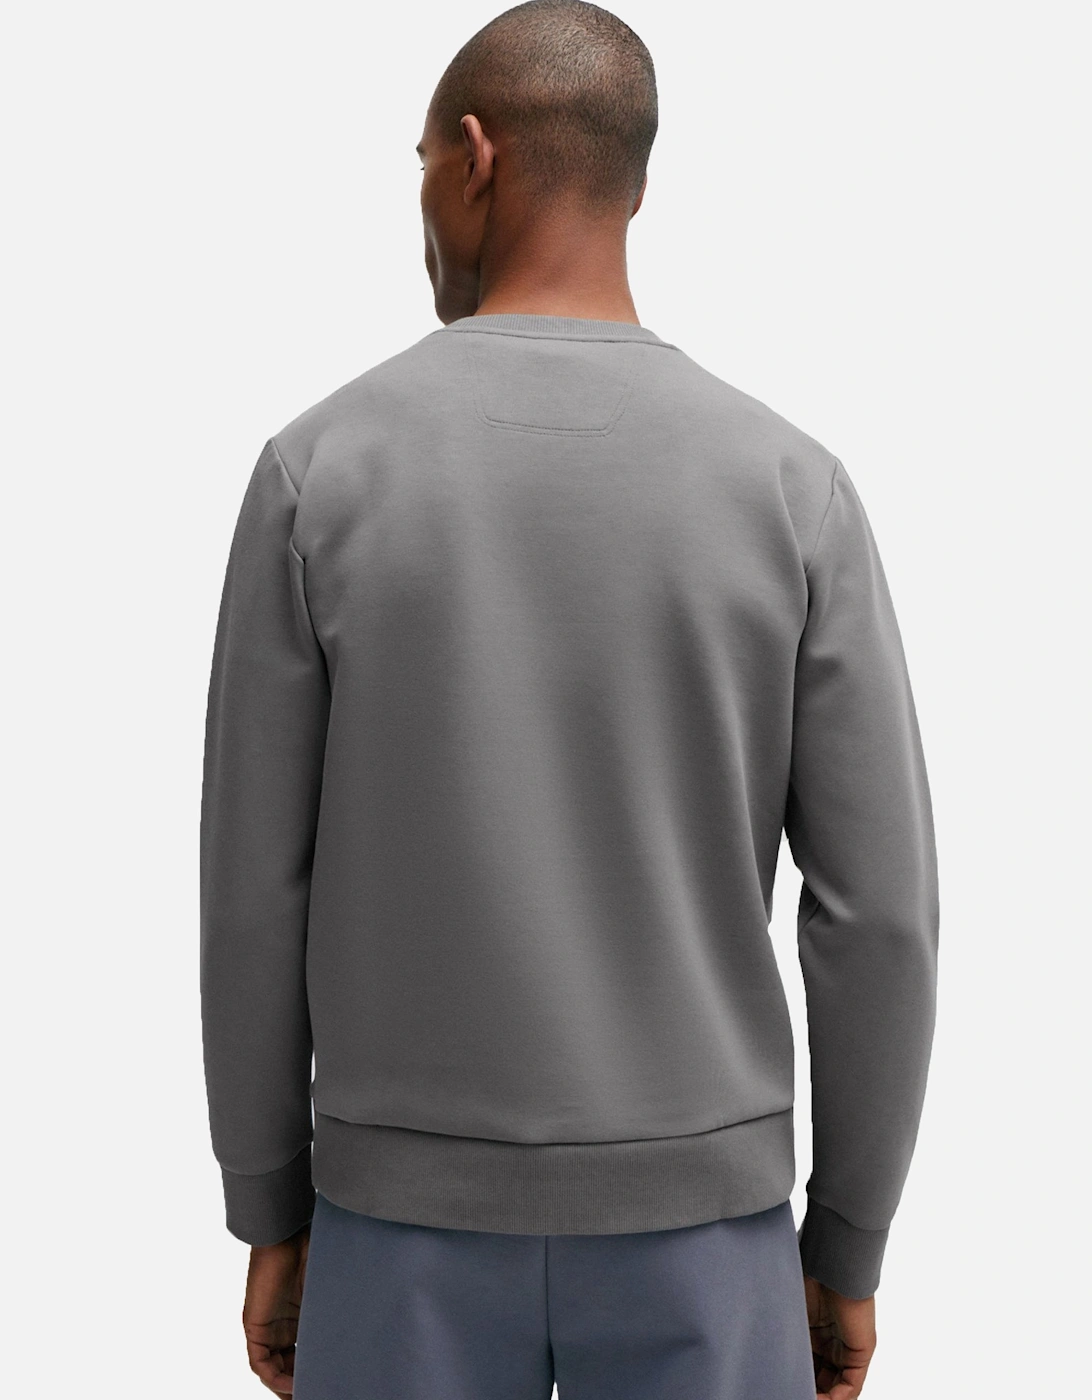 Boss Salbon Sweatshirt Medium Grey